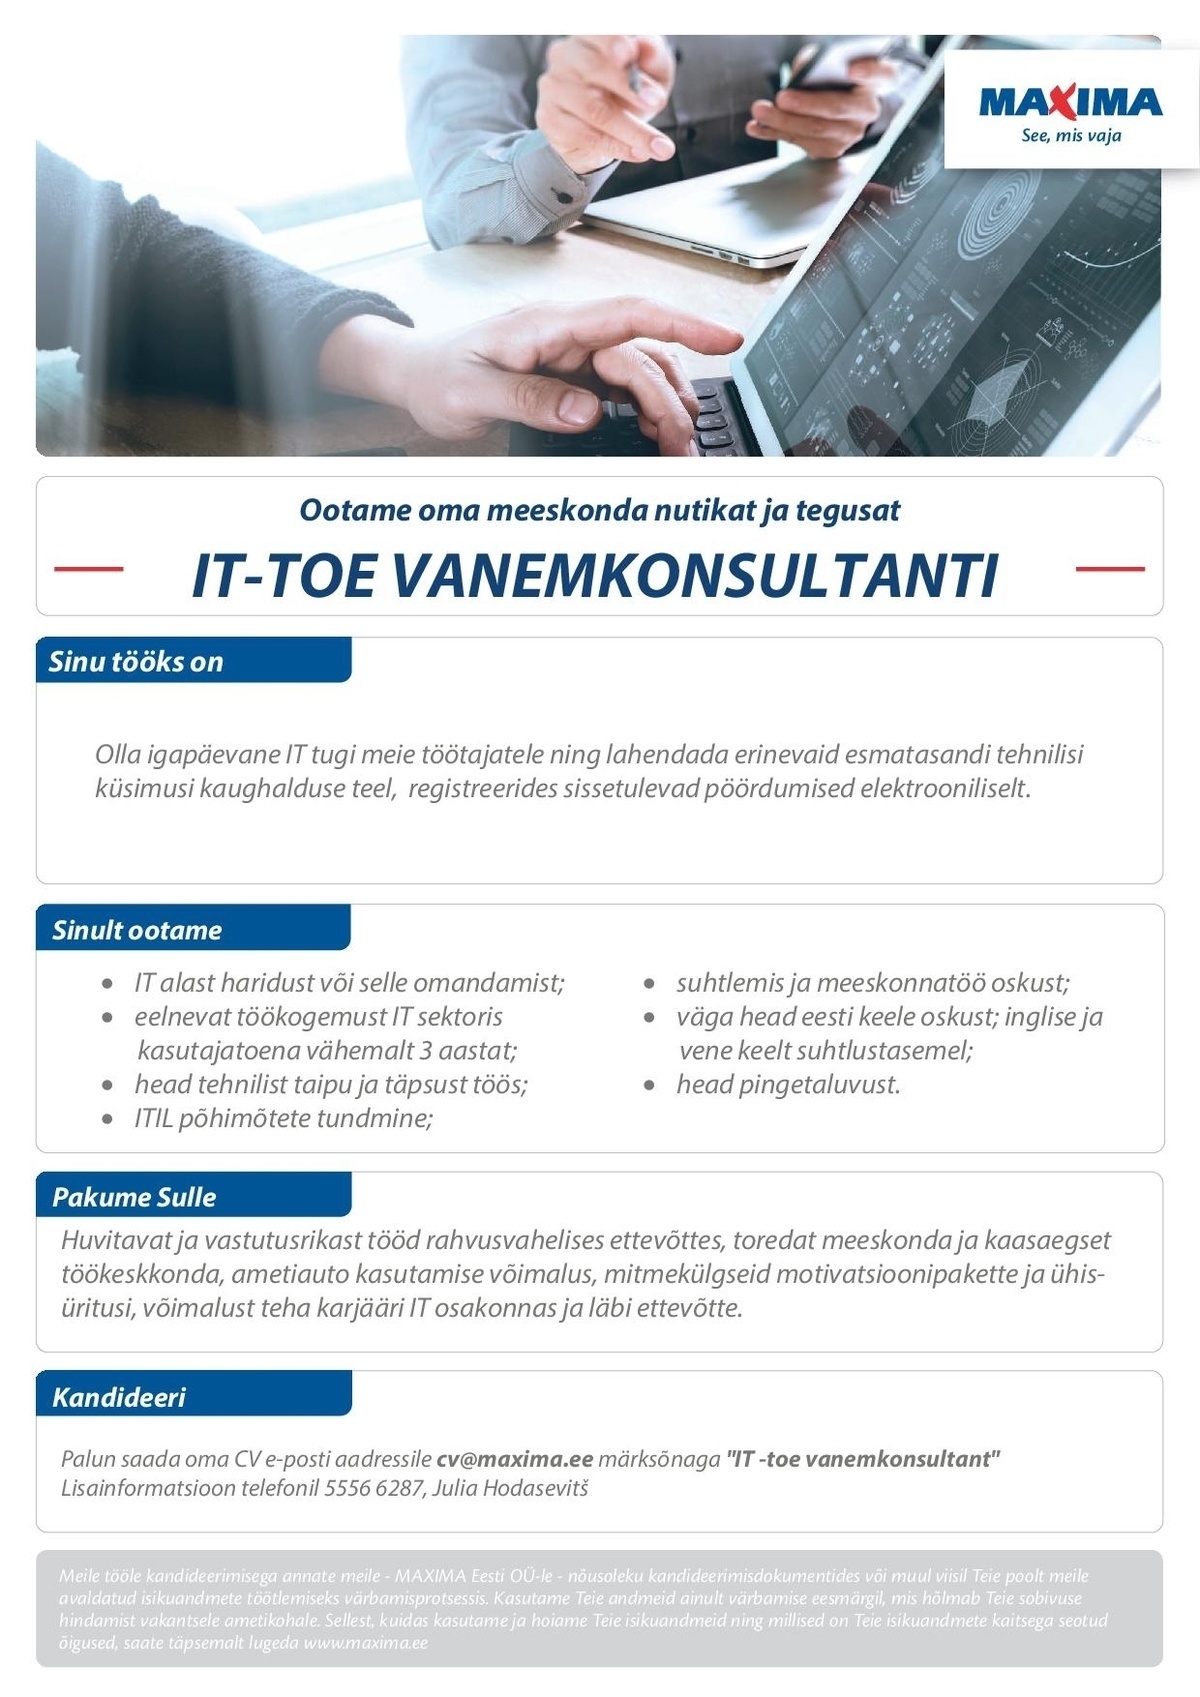 Maxima Eesti OÜ IT-toe vanemkonsultant